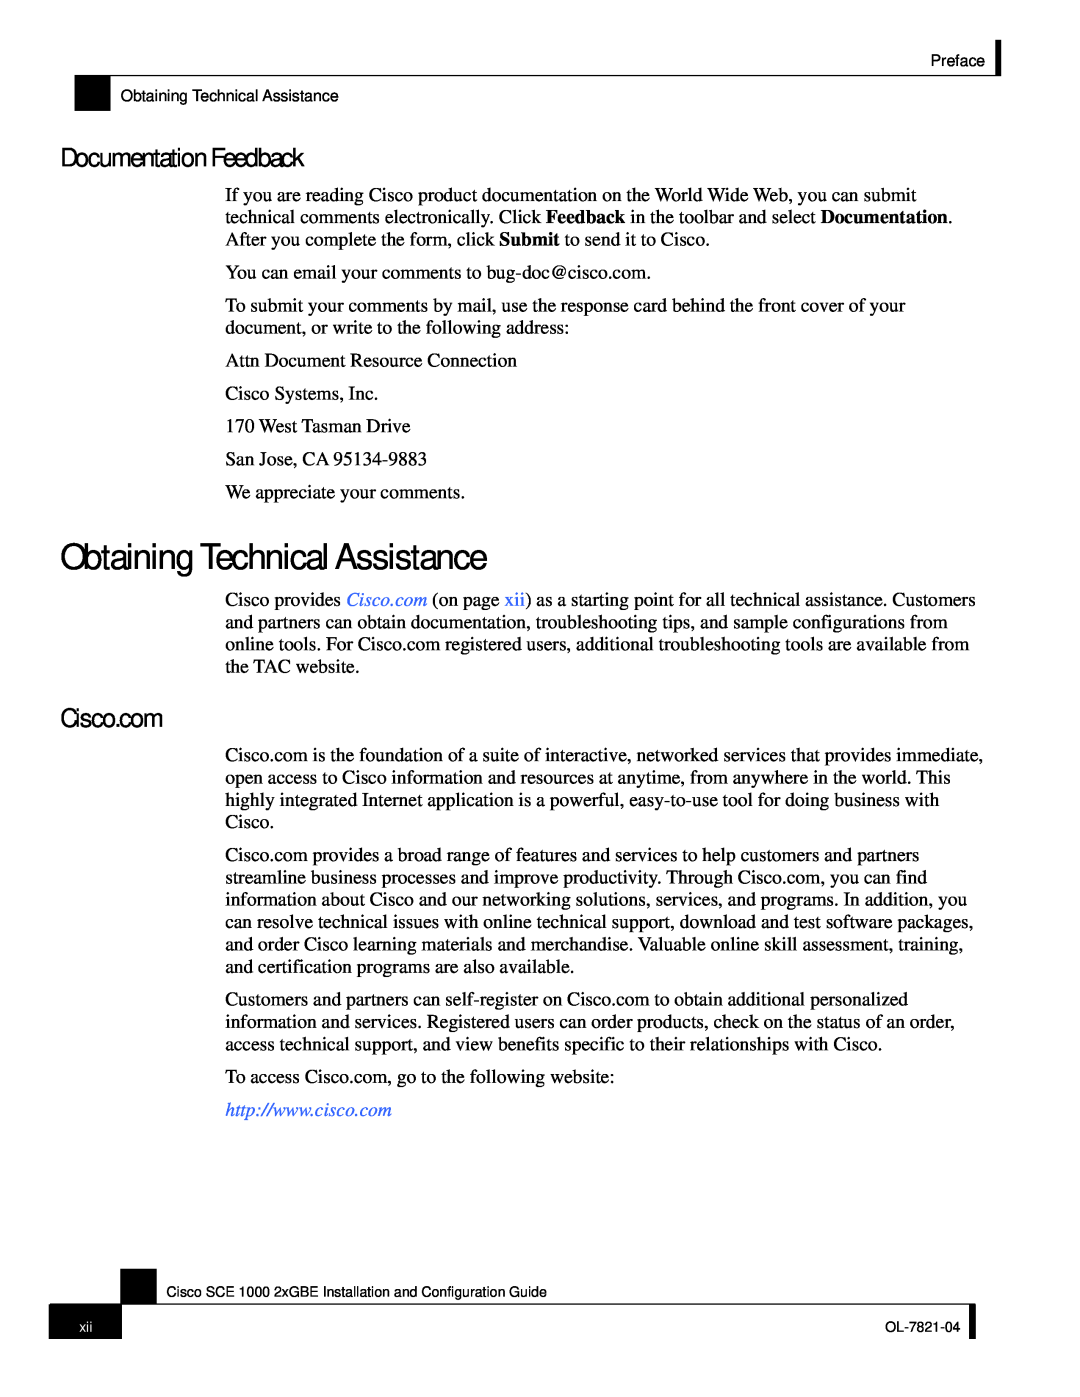 Cisco Systems OL-7821-04, SCE 1000 2xGBE manual Obtaining Technical Assistance, Documentation Feedback, Cisco.com 